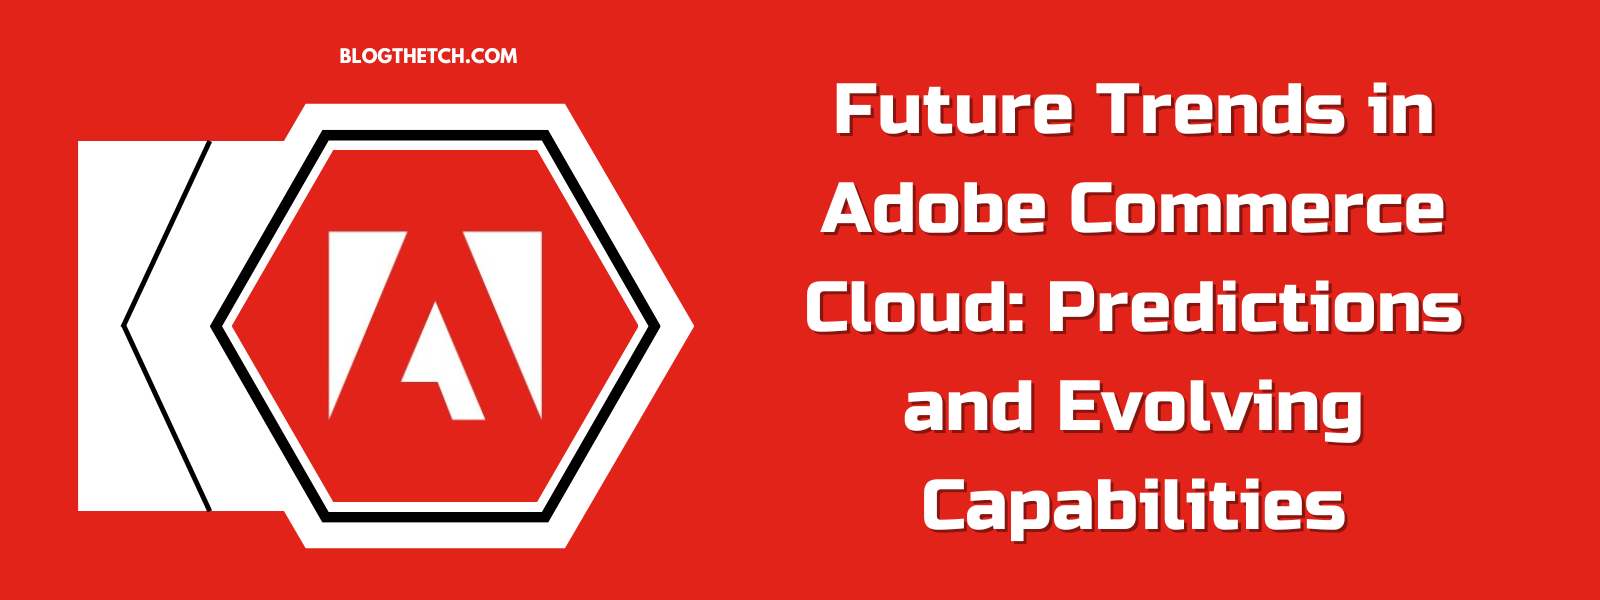 Future-Trends-in-Adobe-Commerce-Cloud-Featured